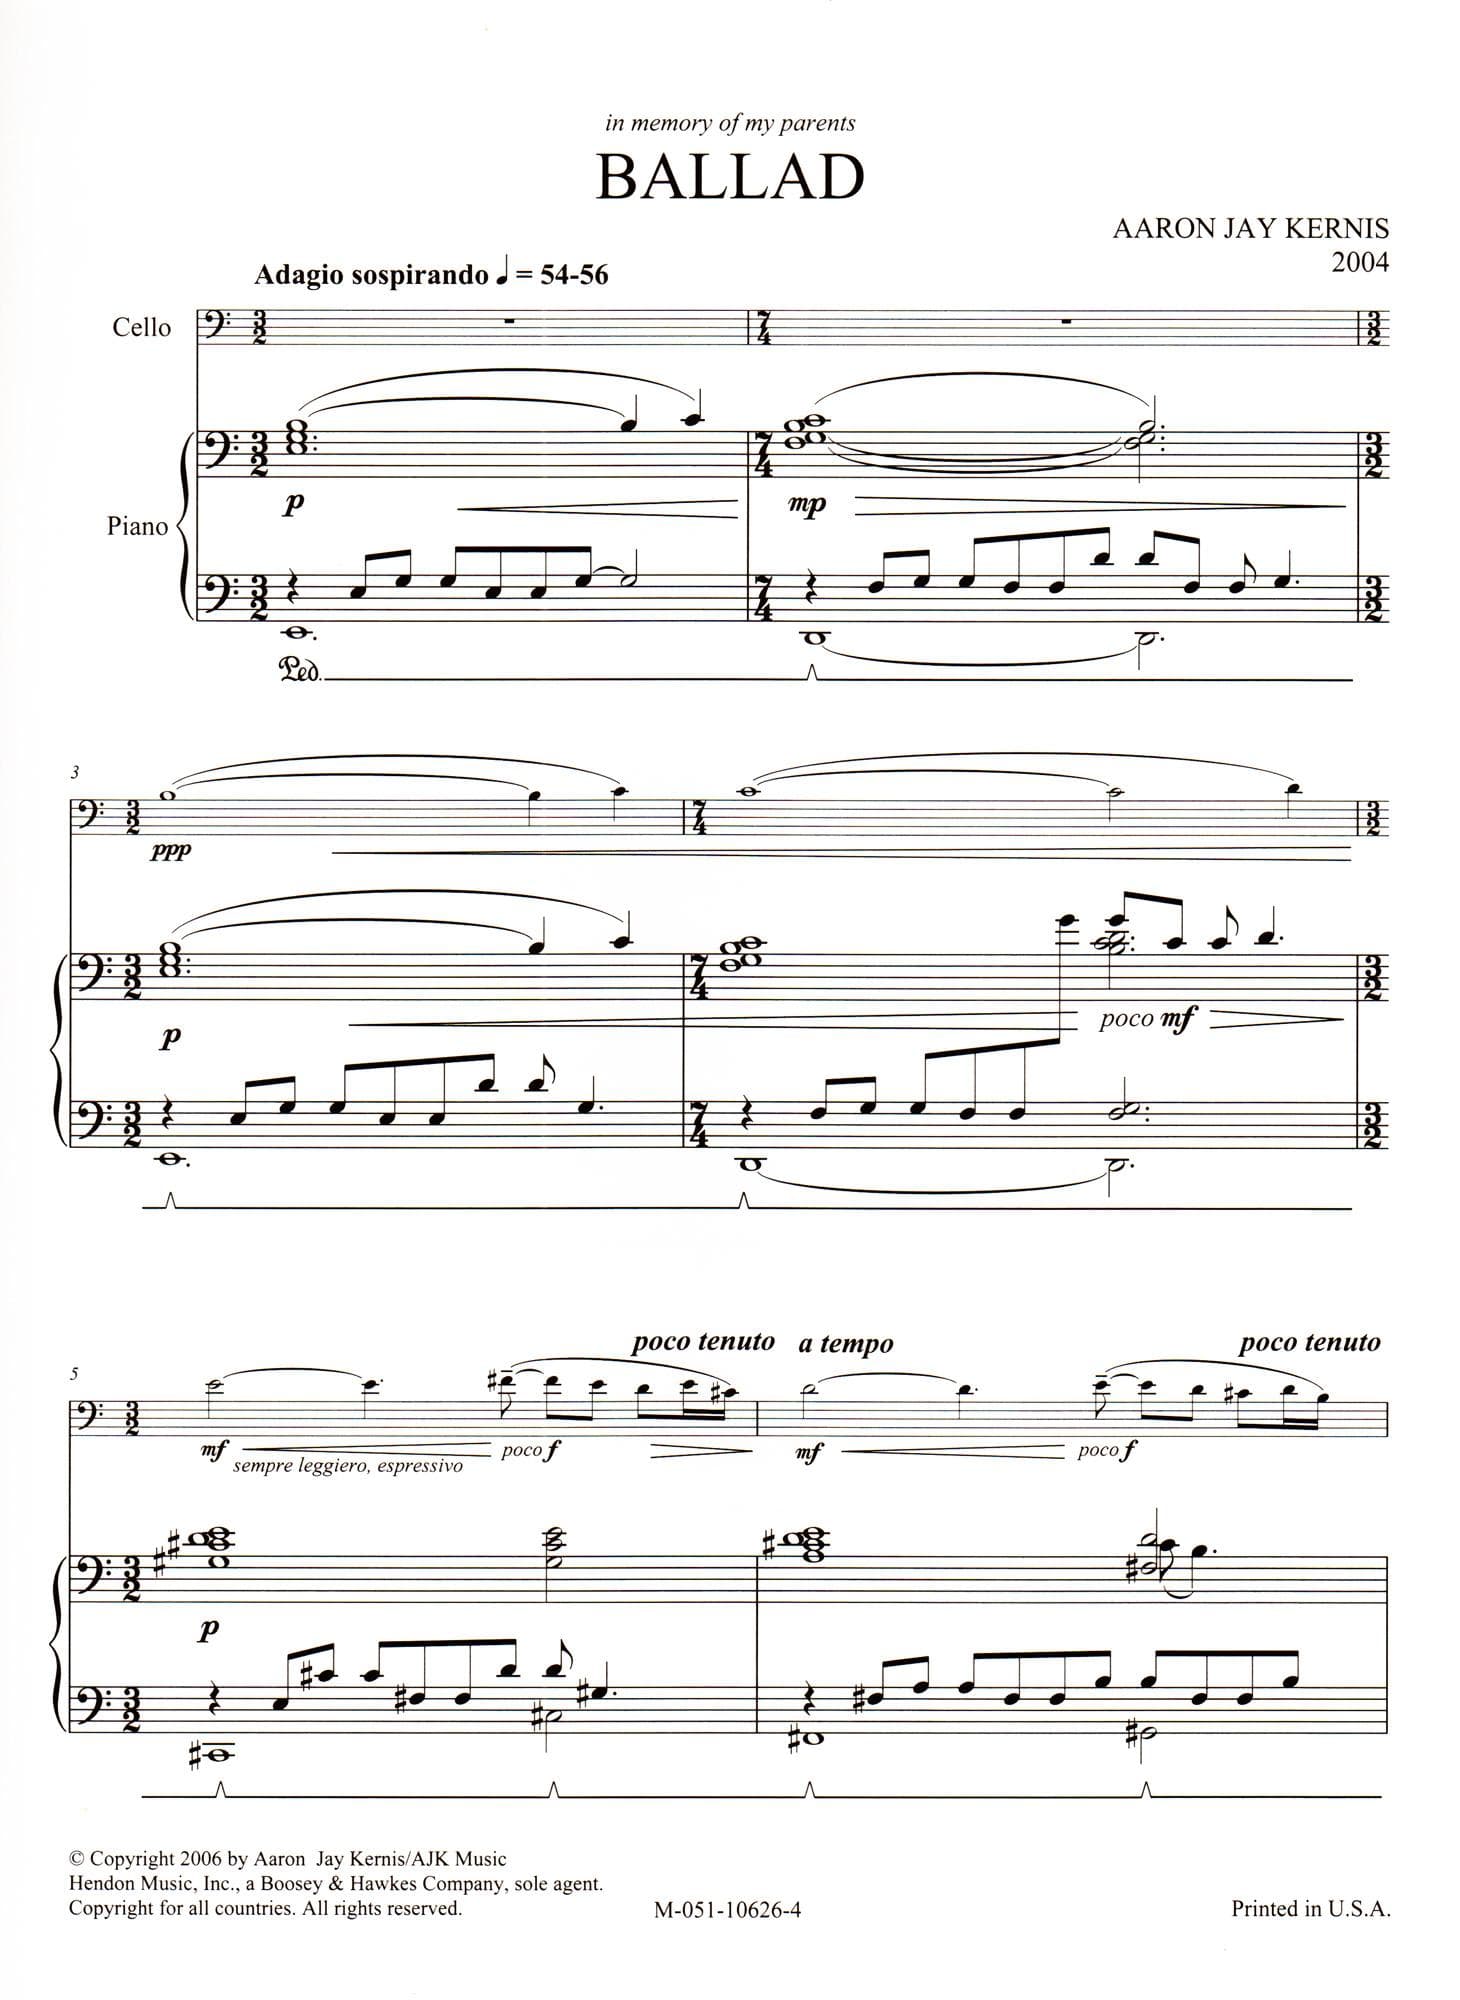 Kernis, Aaron Jay - Ballad - Cello and Piano - Boosey & Hawkes Edition